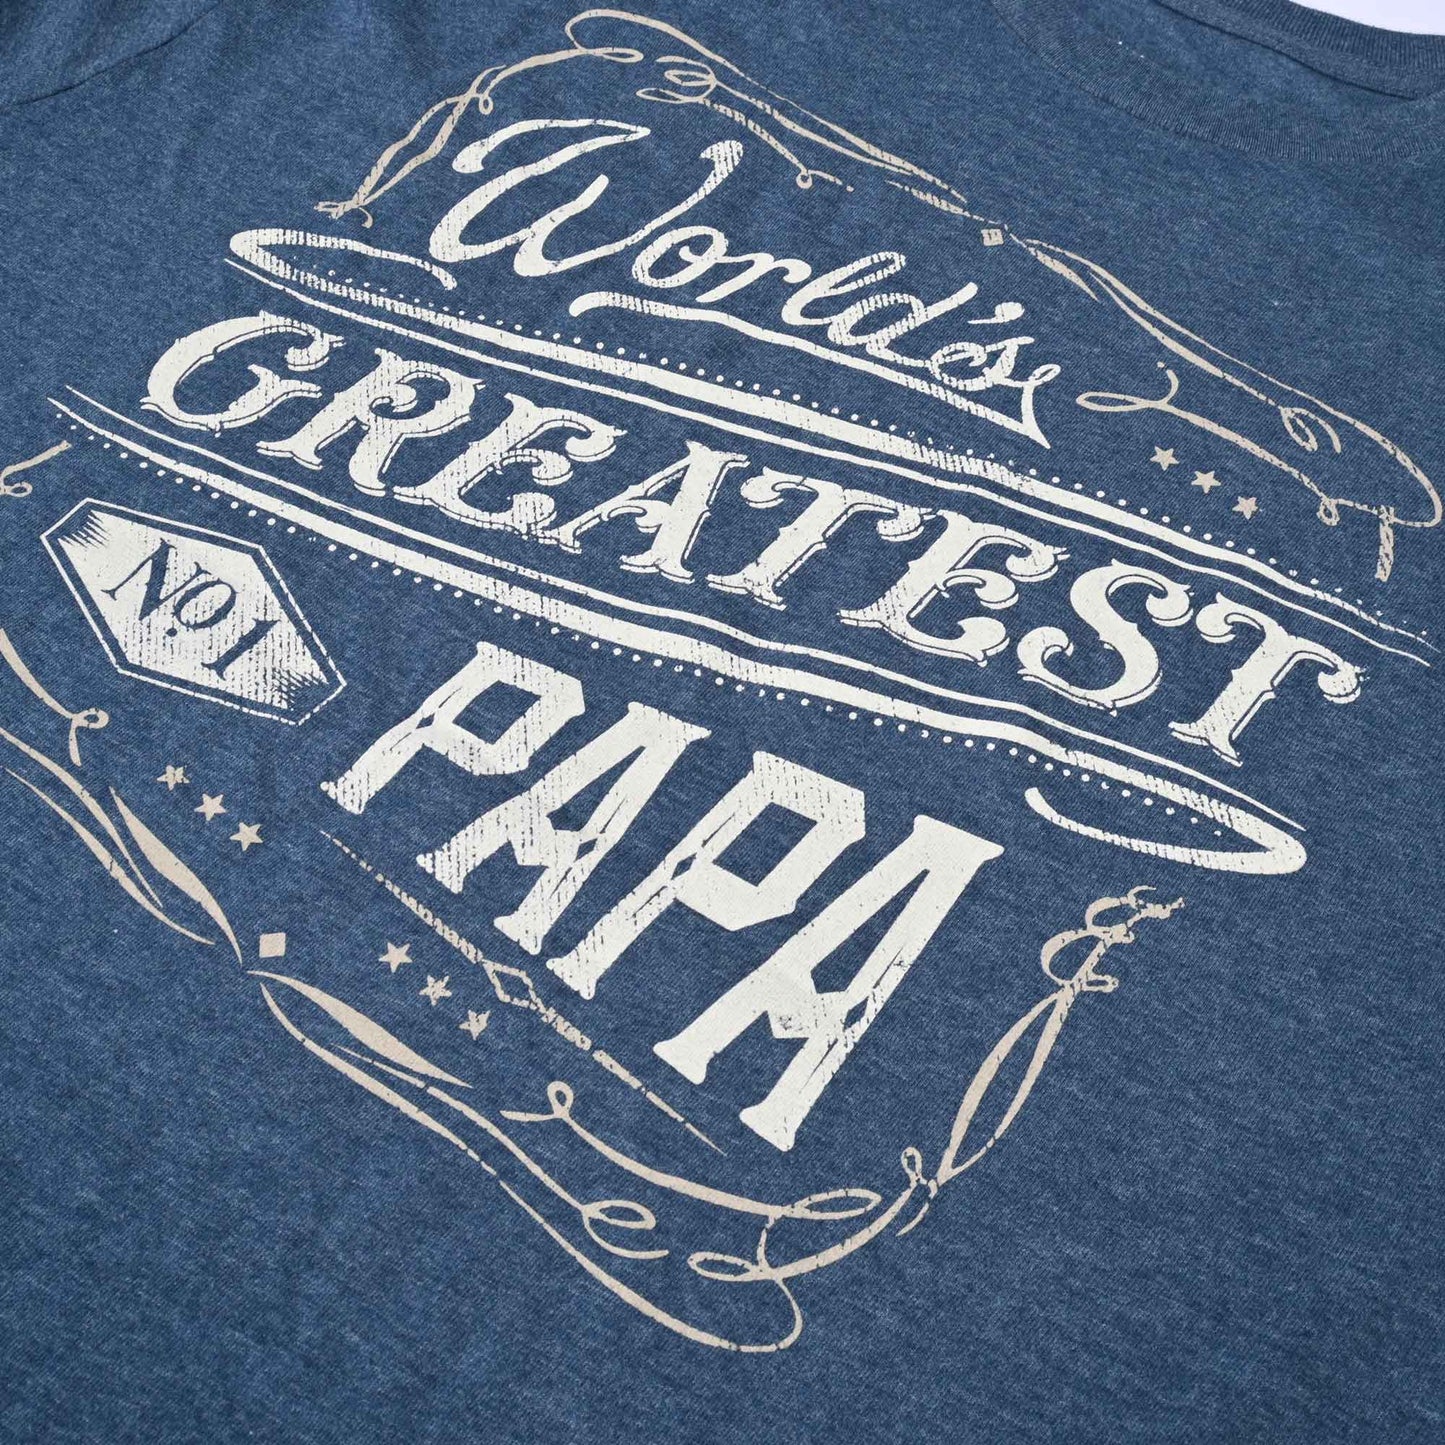 Celebrate Men's World Greatest Papa Printed Style Tee Shirt Men's Tee Shirt HAS Apparel 